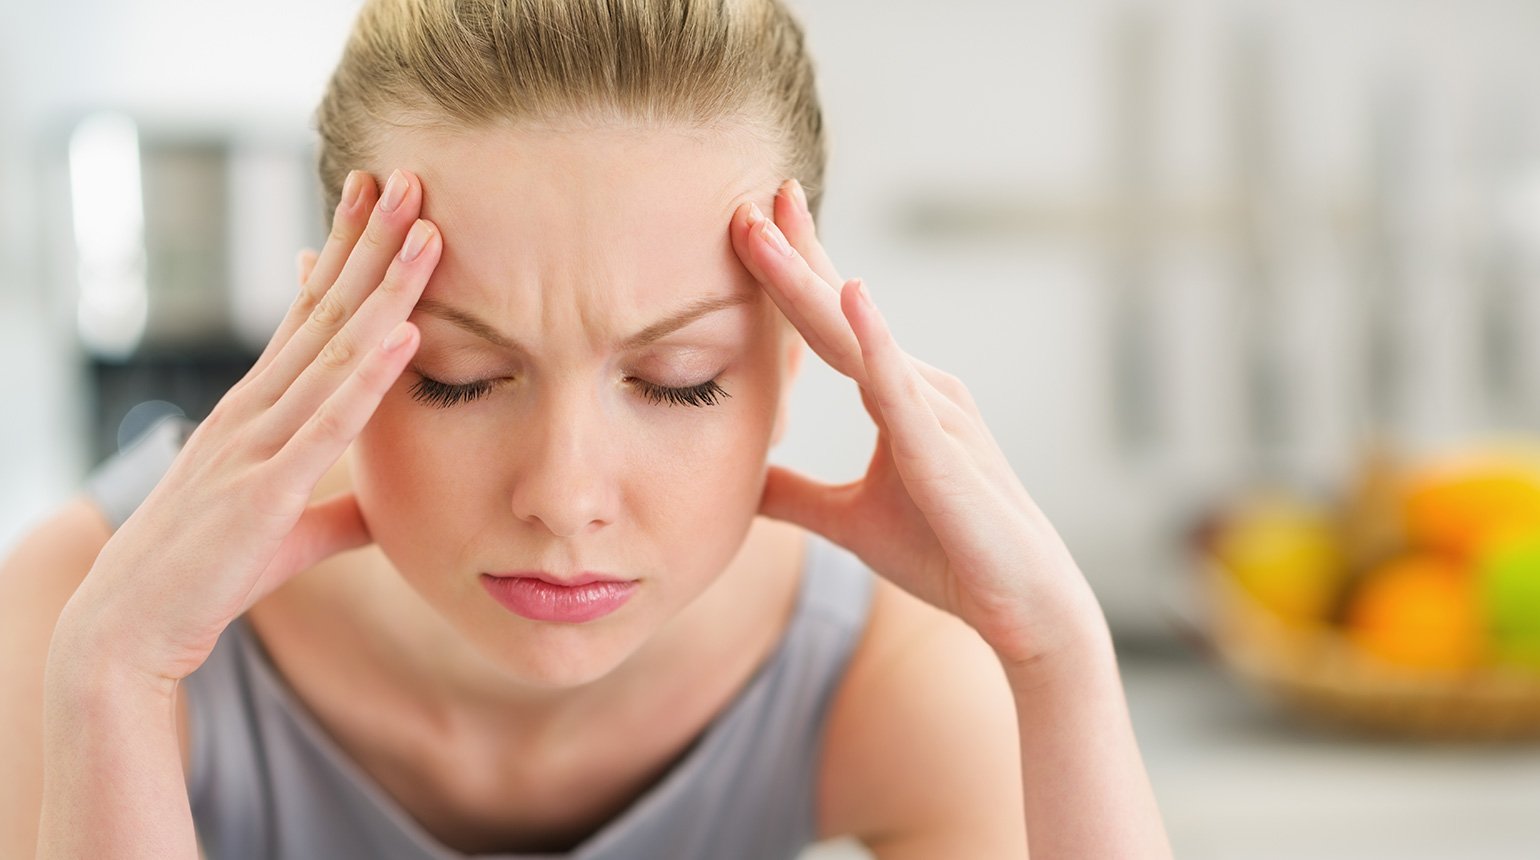 What foods help headaches go away?